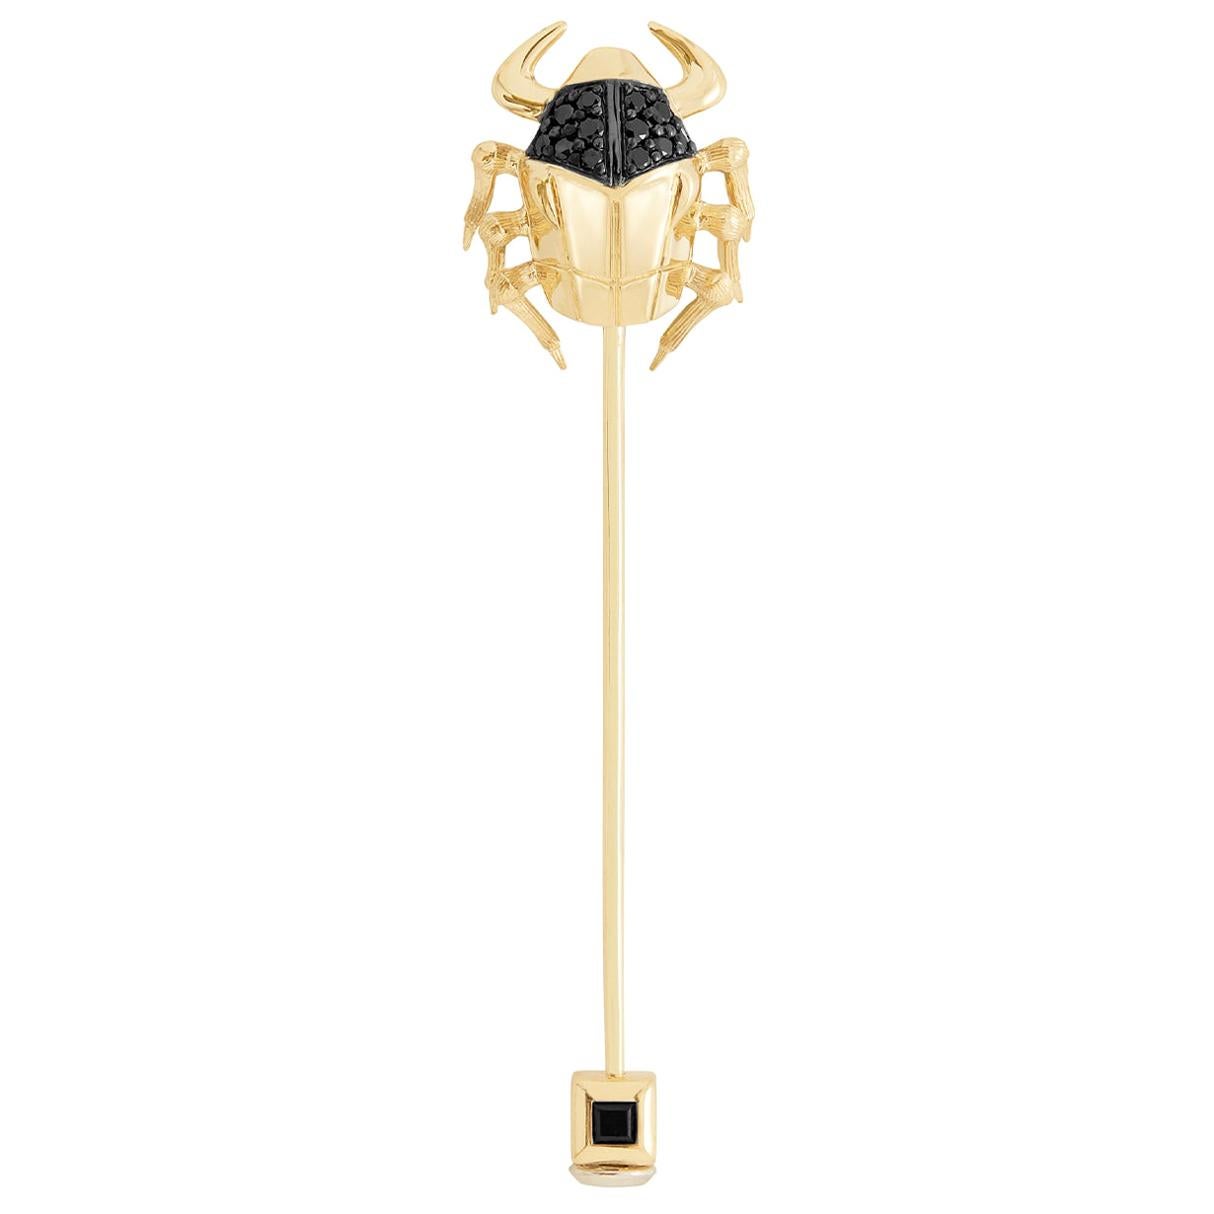 Stephen Webster Jitterbug Toro Beetle 18 Carat Gold and Black Diamond Lapel Pin